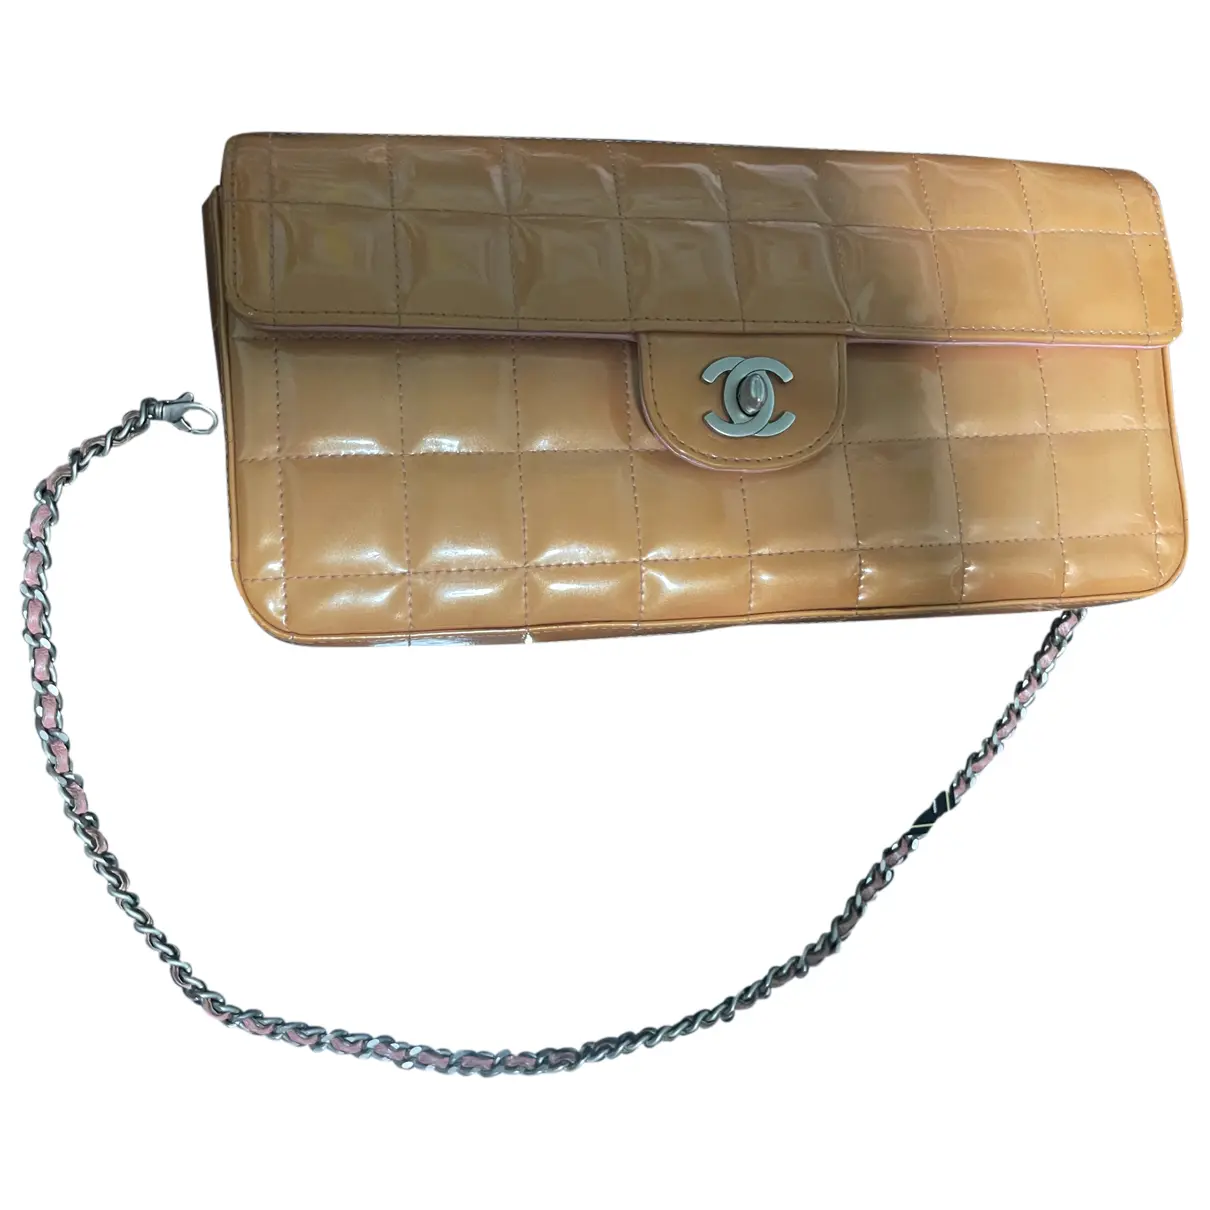 East West Chocolate Bar patent leather handbag Chanel